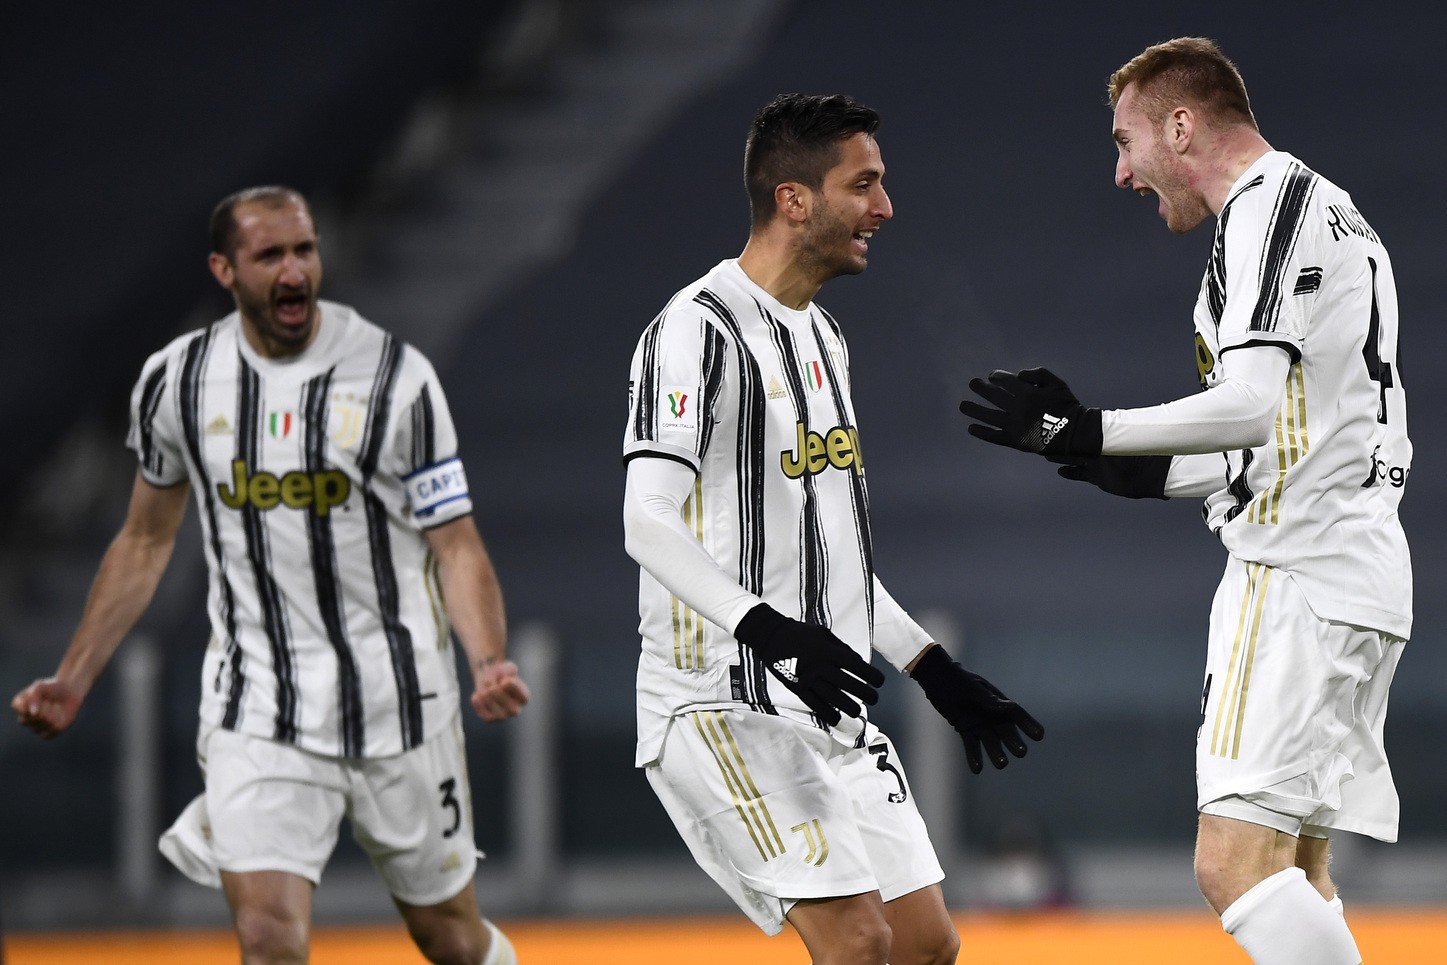 Trovato l'errore di Fabbri in Sampdoria-Juventus |  Sport e Vai